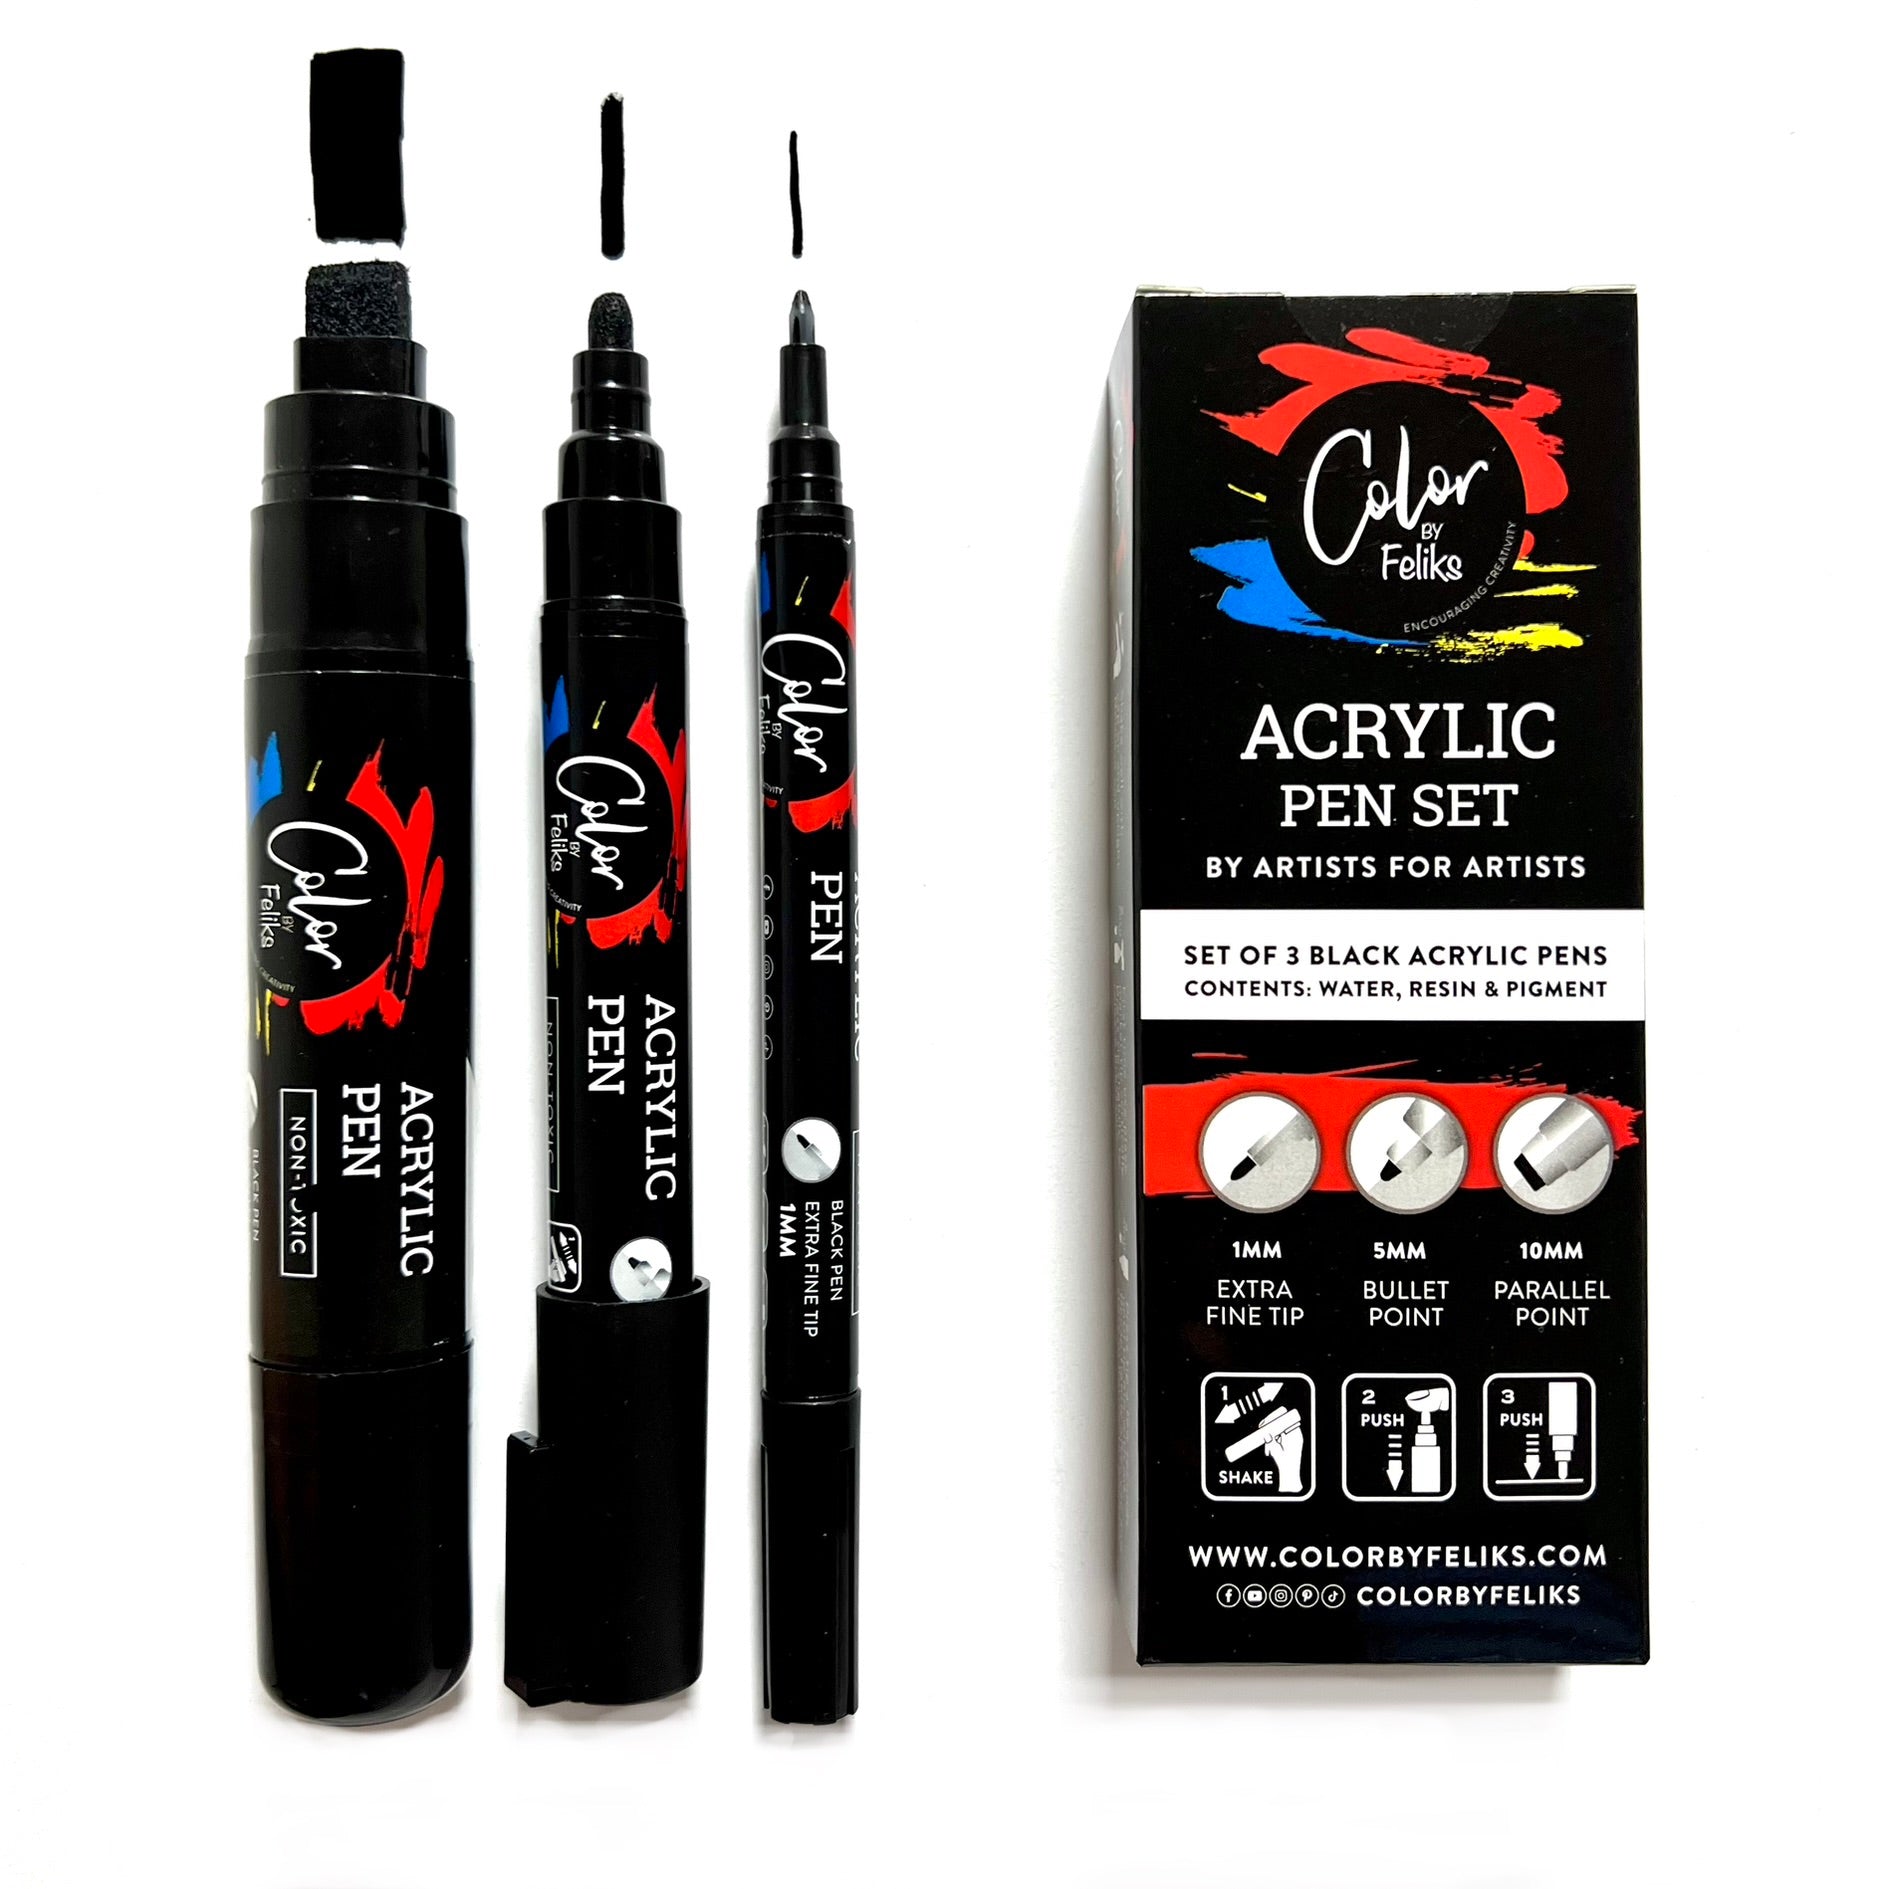 Black acrylic paint pen set